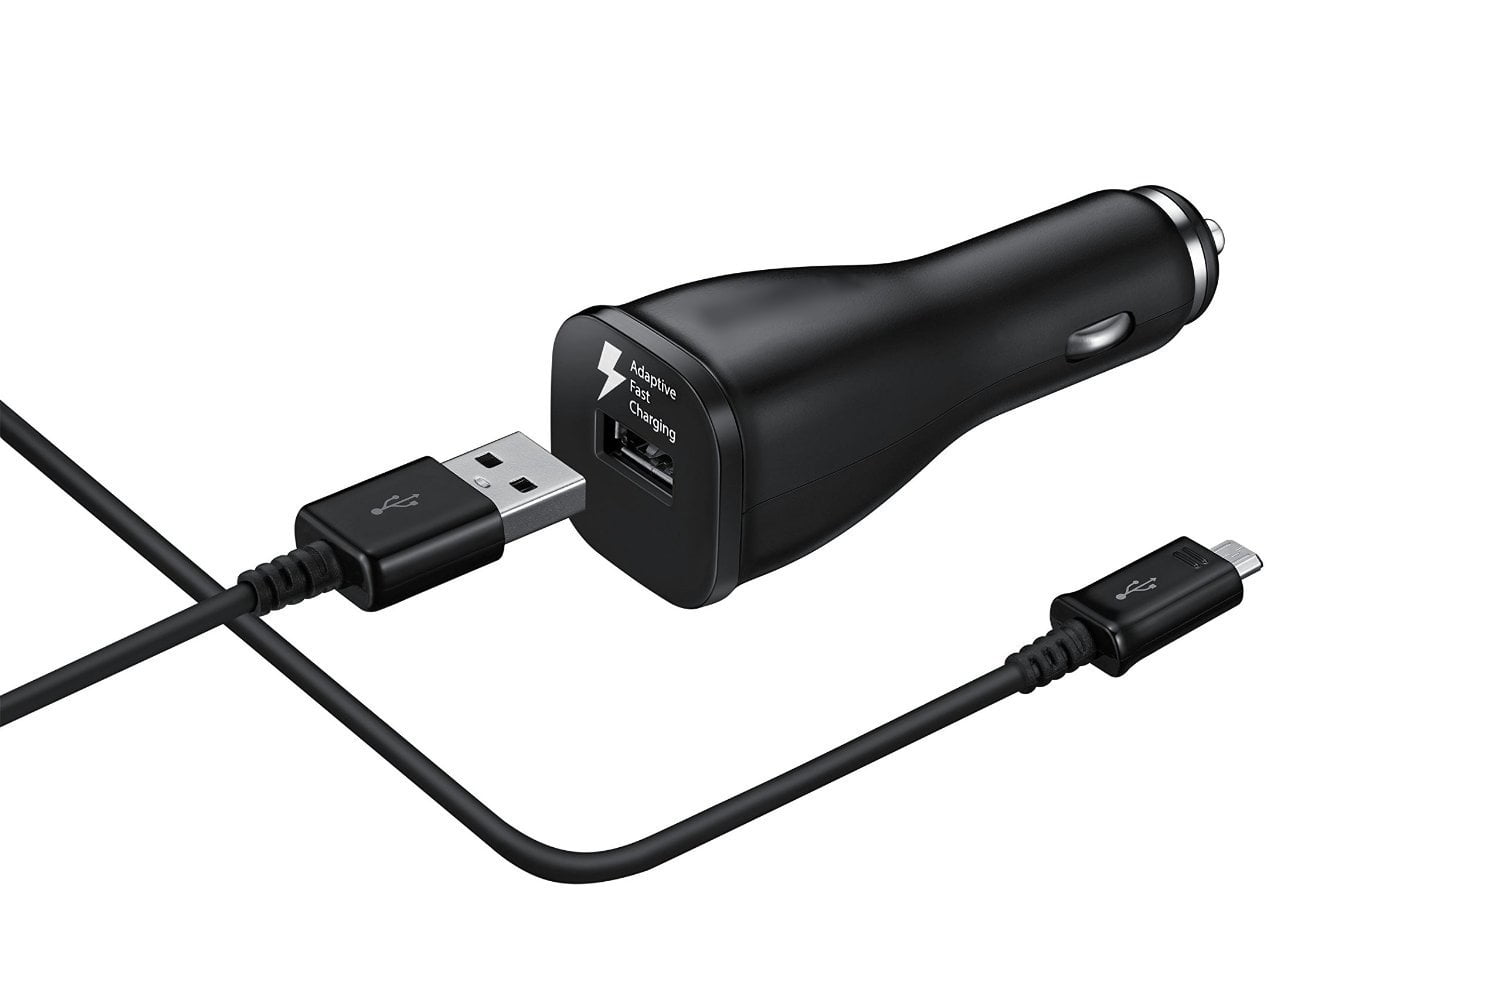 G6 Play G6 Forge Cellet 10 Watt / 2.1 Amp Micro USB Car Charger Retractable 3 Feet Cable Compatible for Motorola Moto E4 E5 Cruise E5 Play E5 Supra E4 Plus E5 Plus